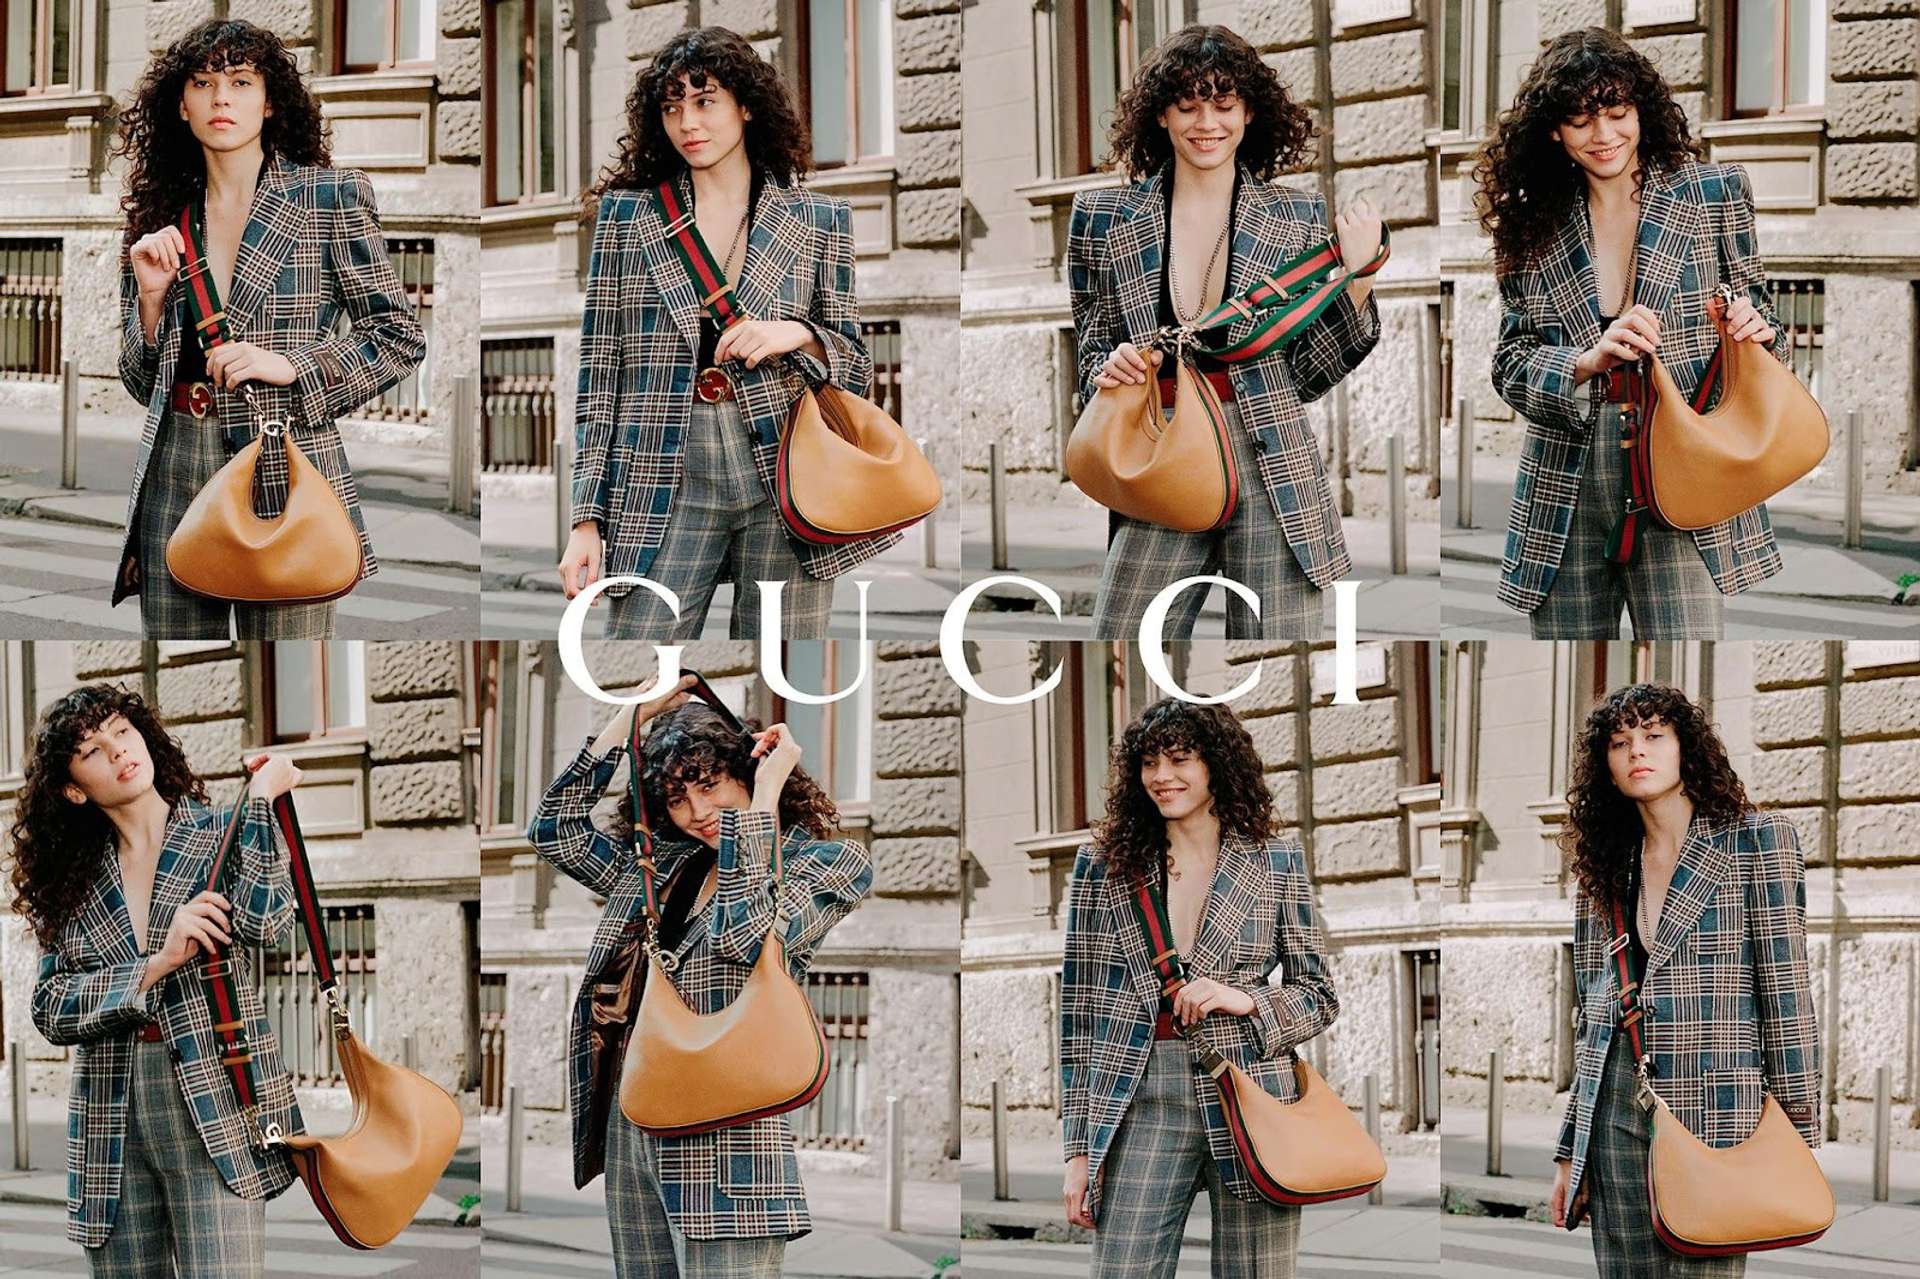 Gucci Ophidia or Prada 2005 re-edition ? : r/handbags